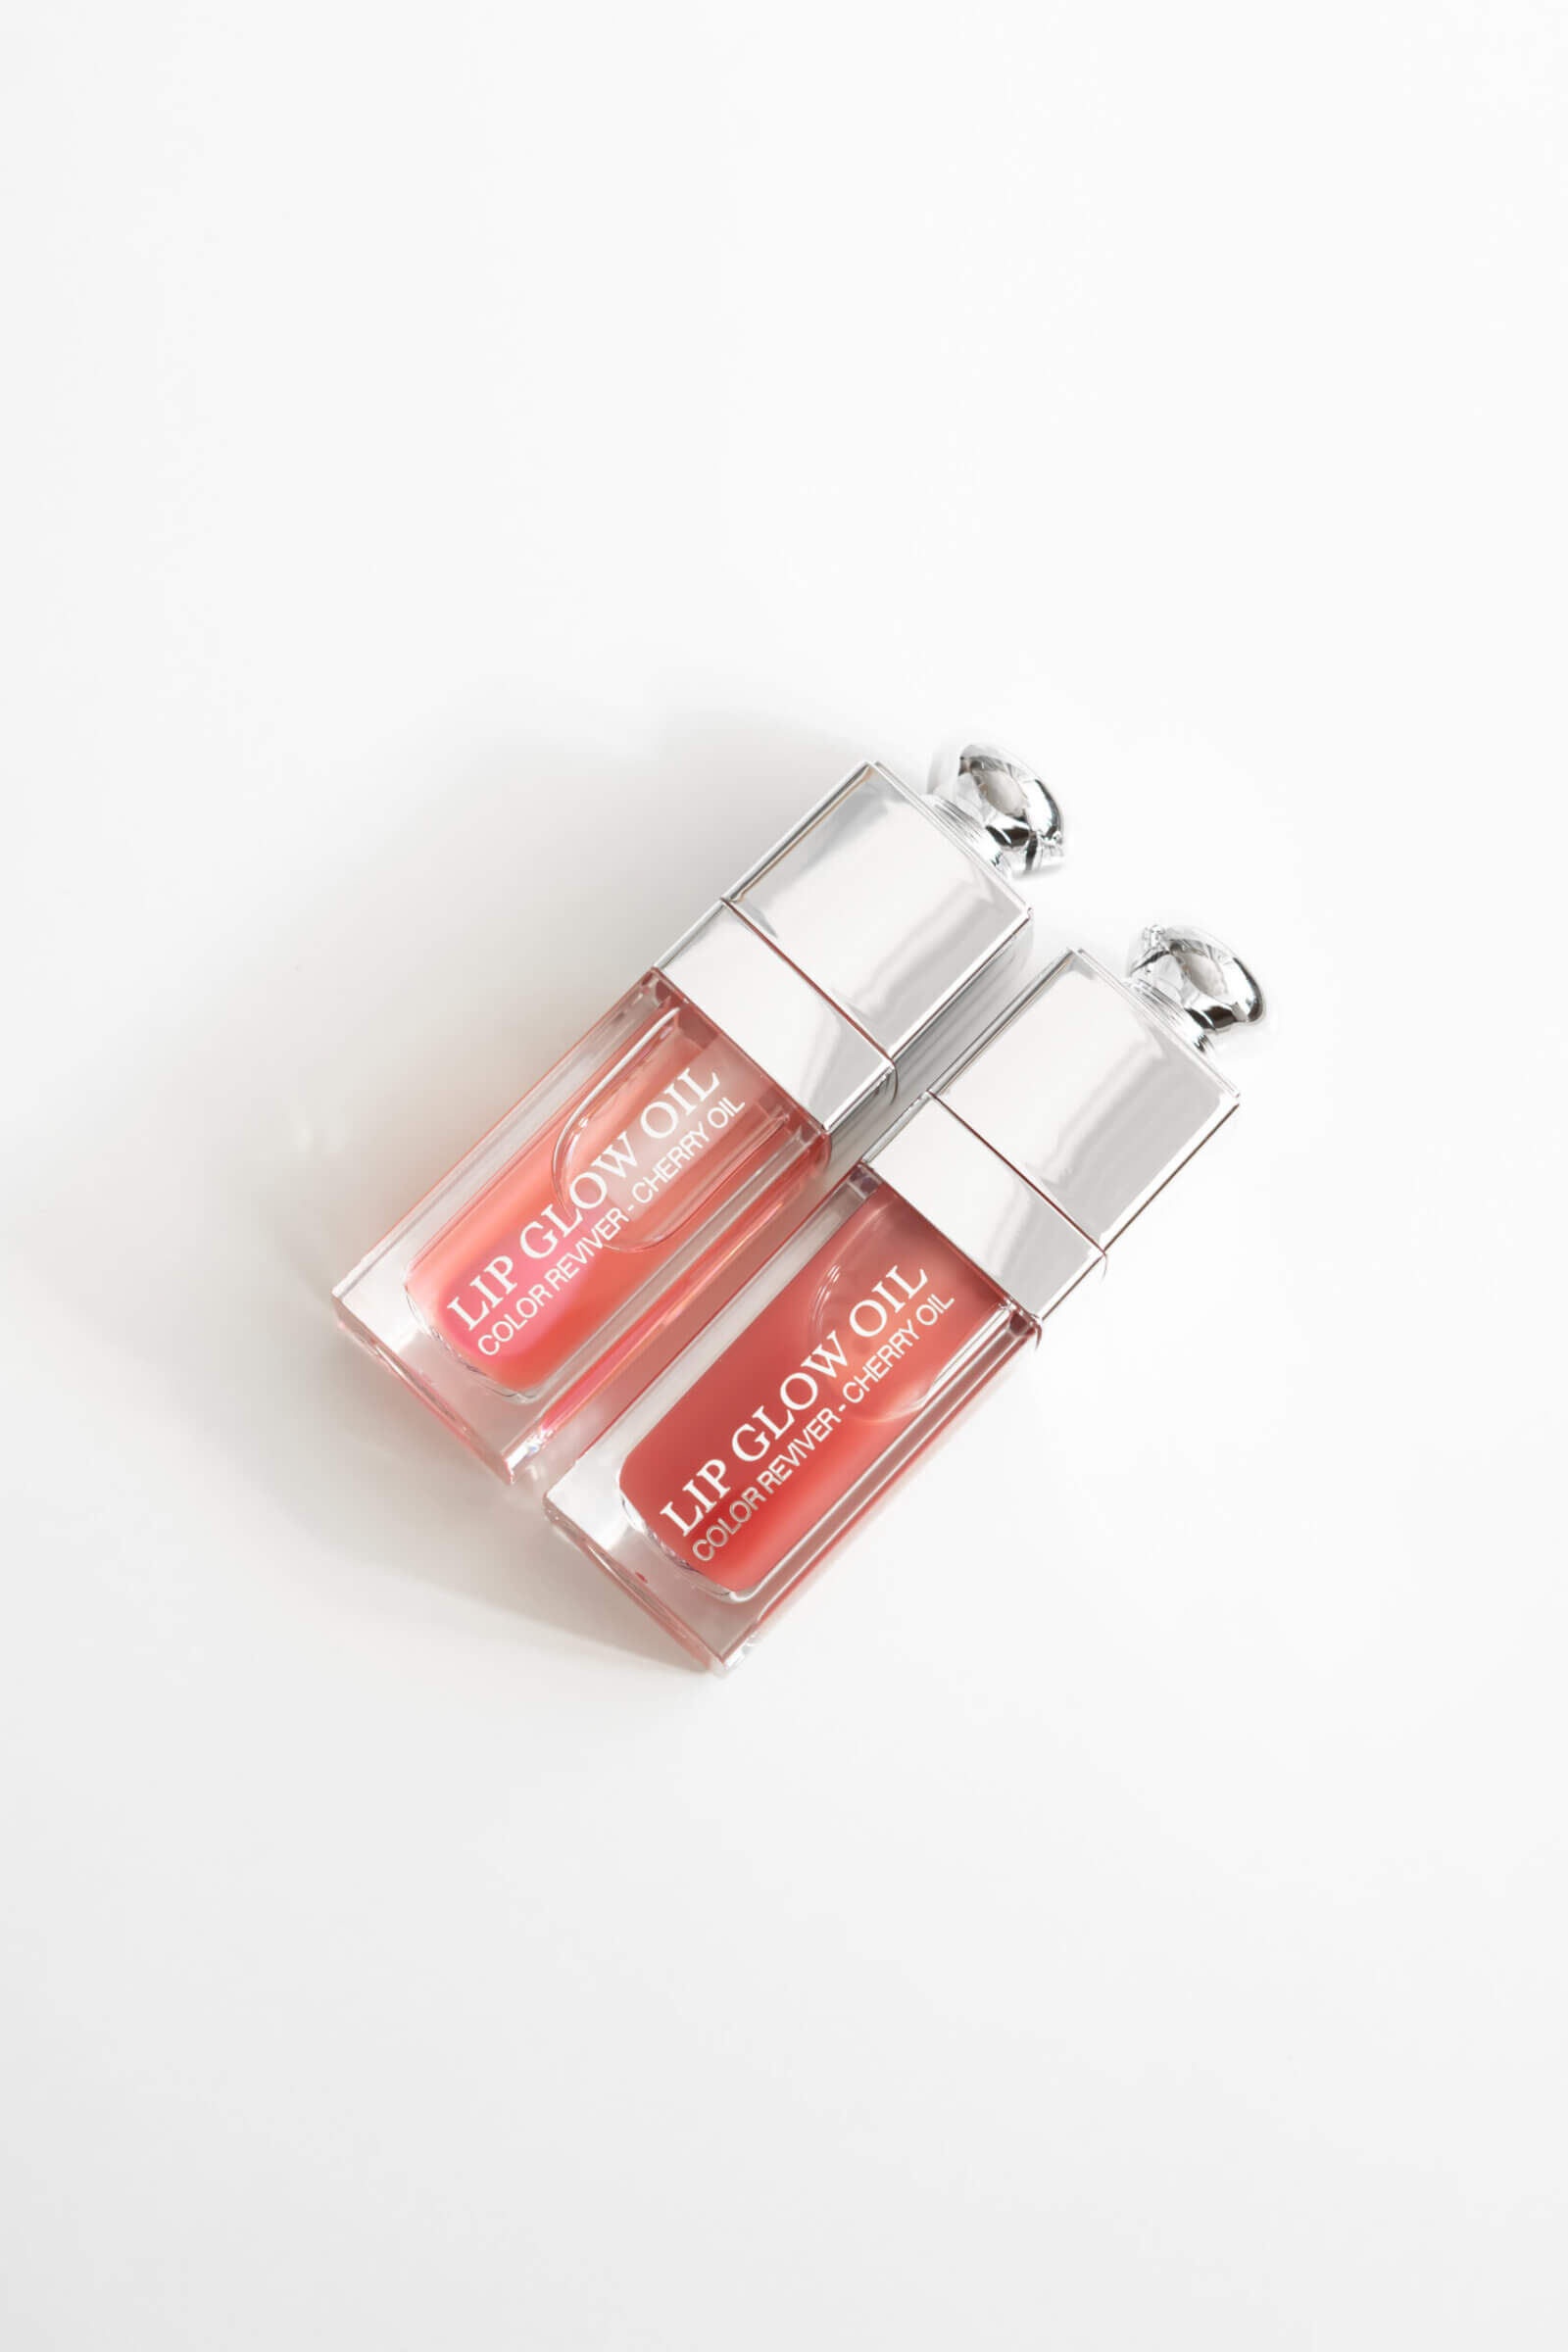 Dior Addict Lip Glow Oil vs Clarins Lip Comfort Oil